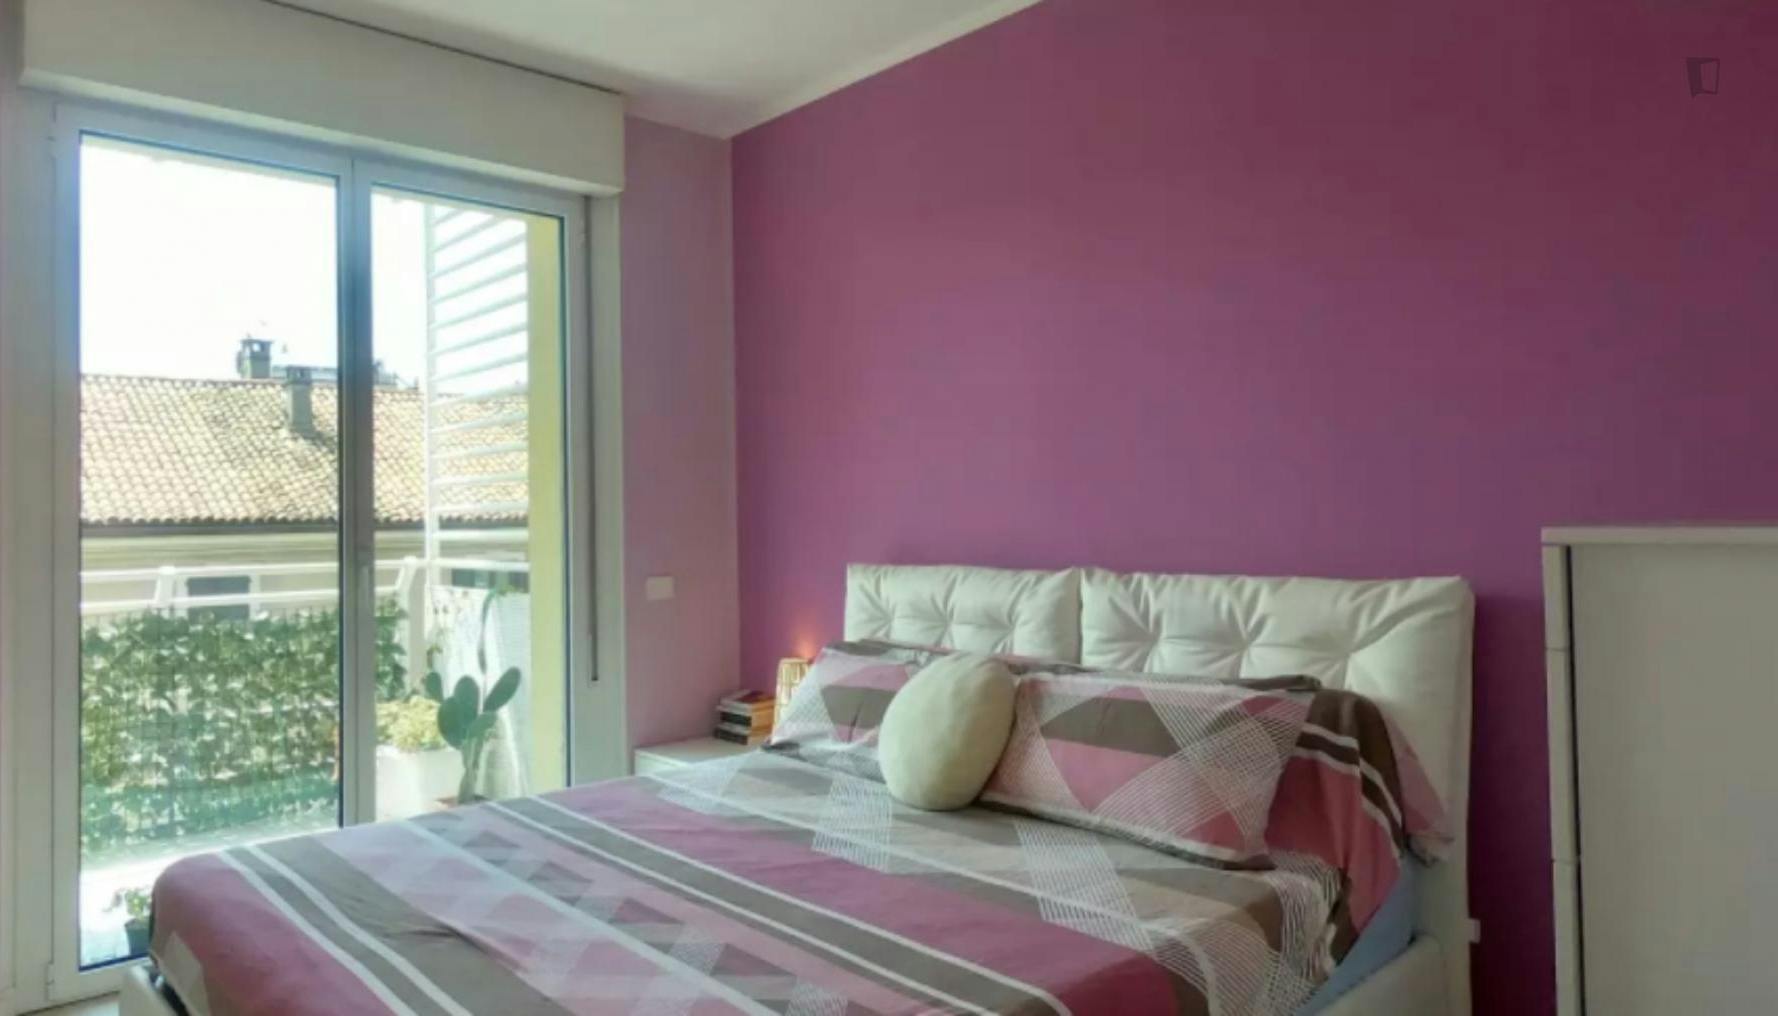 1-Bedroom apartment near Parco "Giovanni Testori"